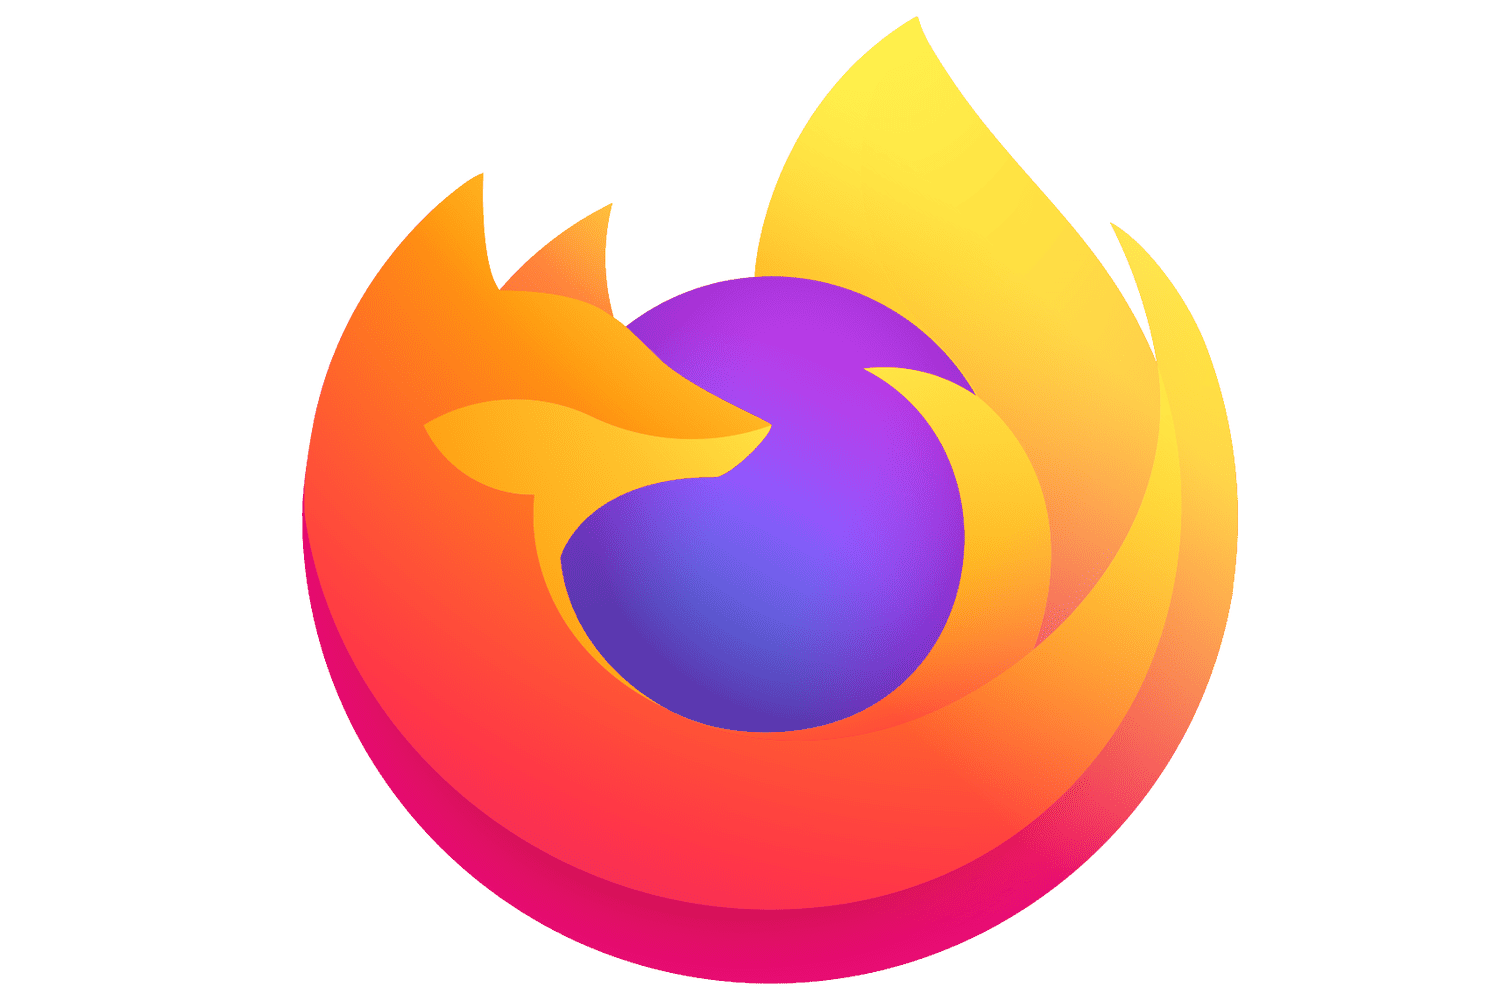 firefox browser logo e5e9fdd4c2c84e4993e17de56fc7e014